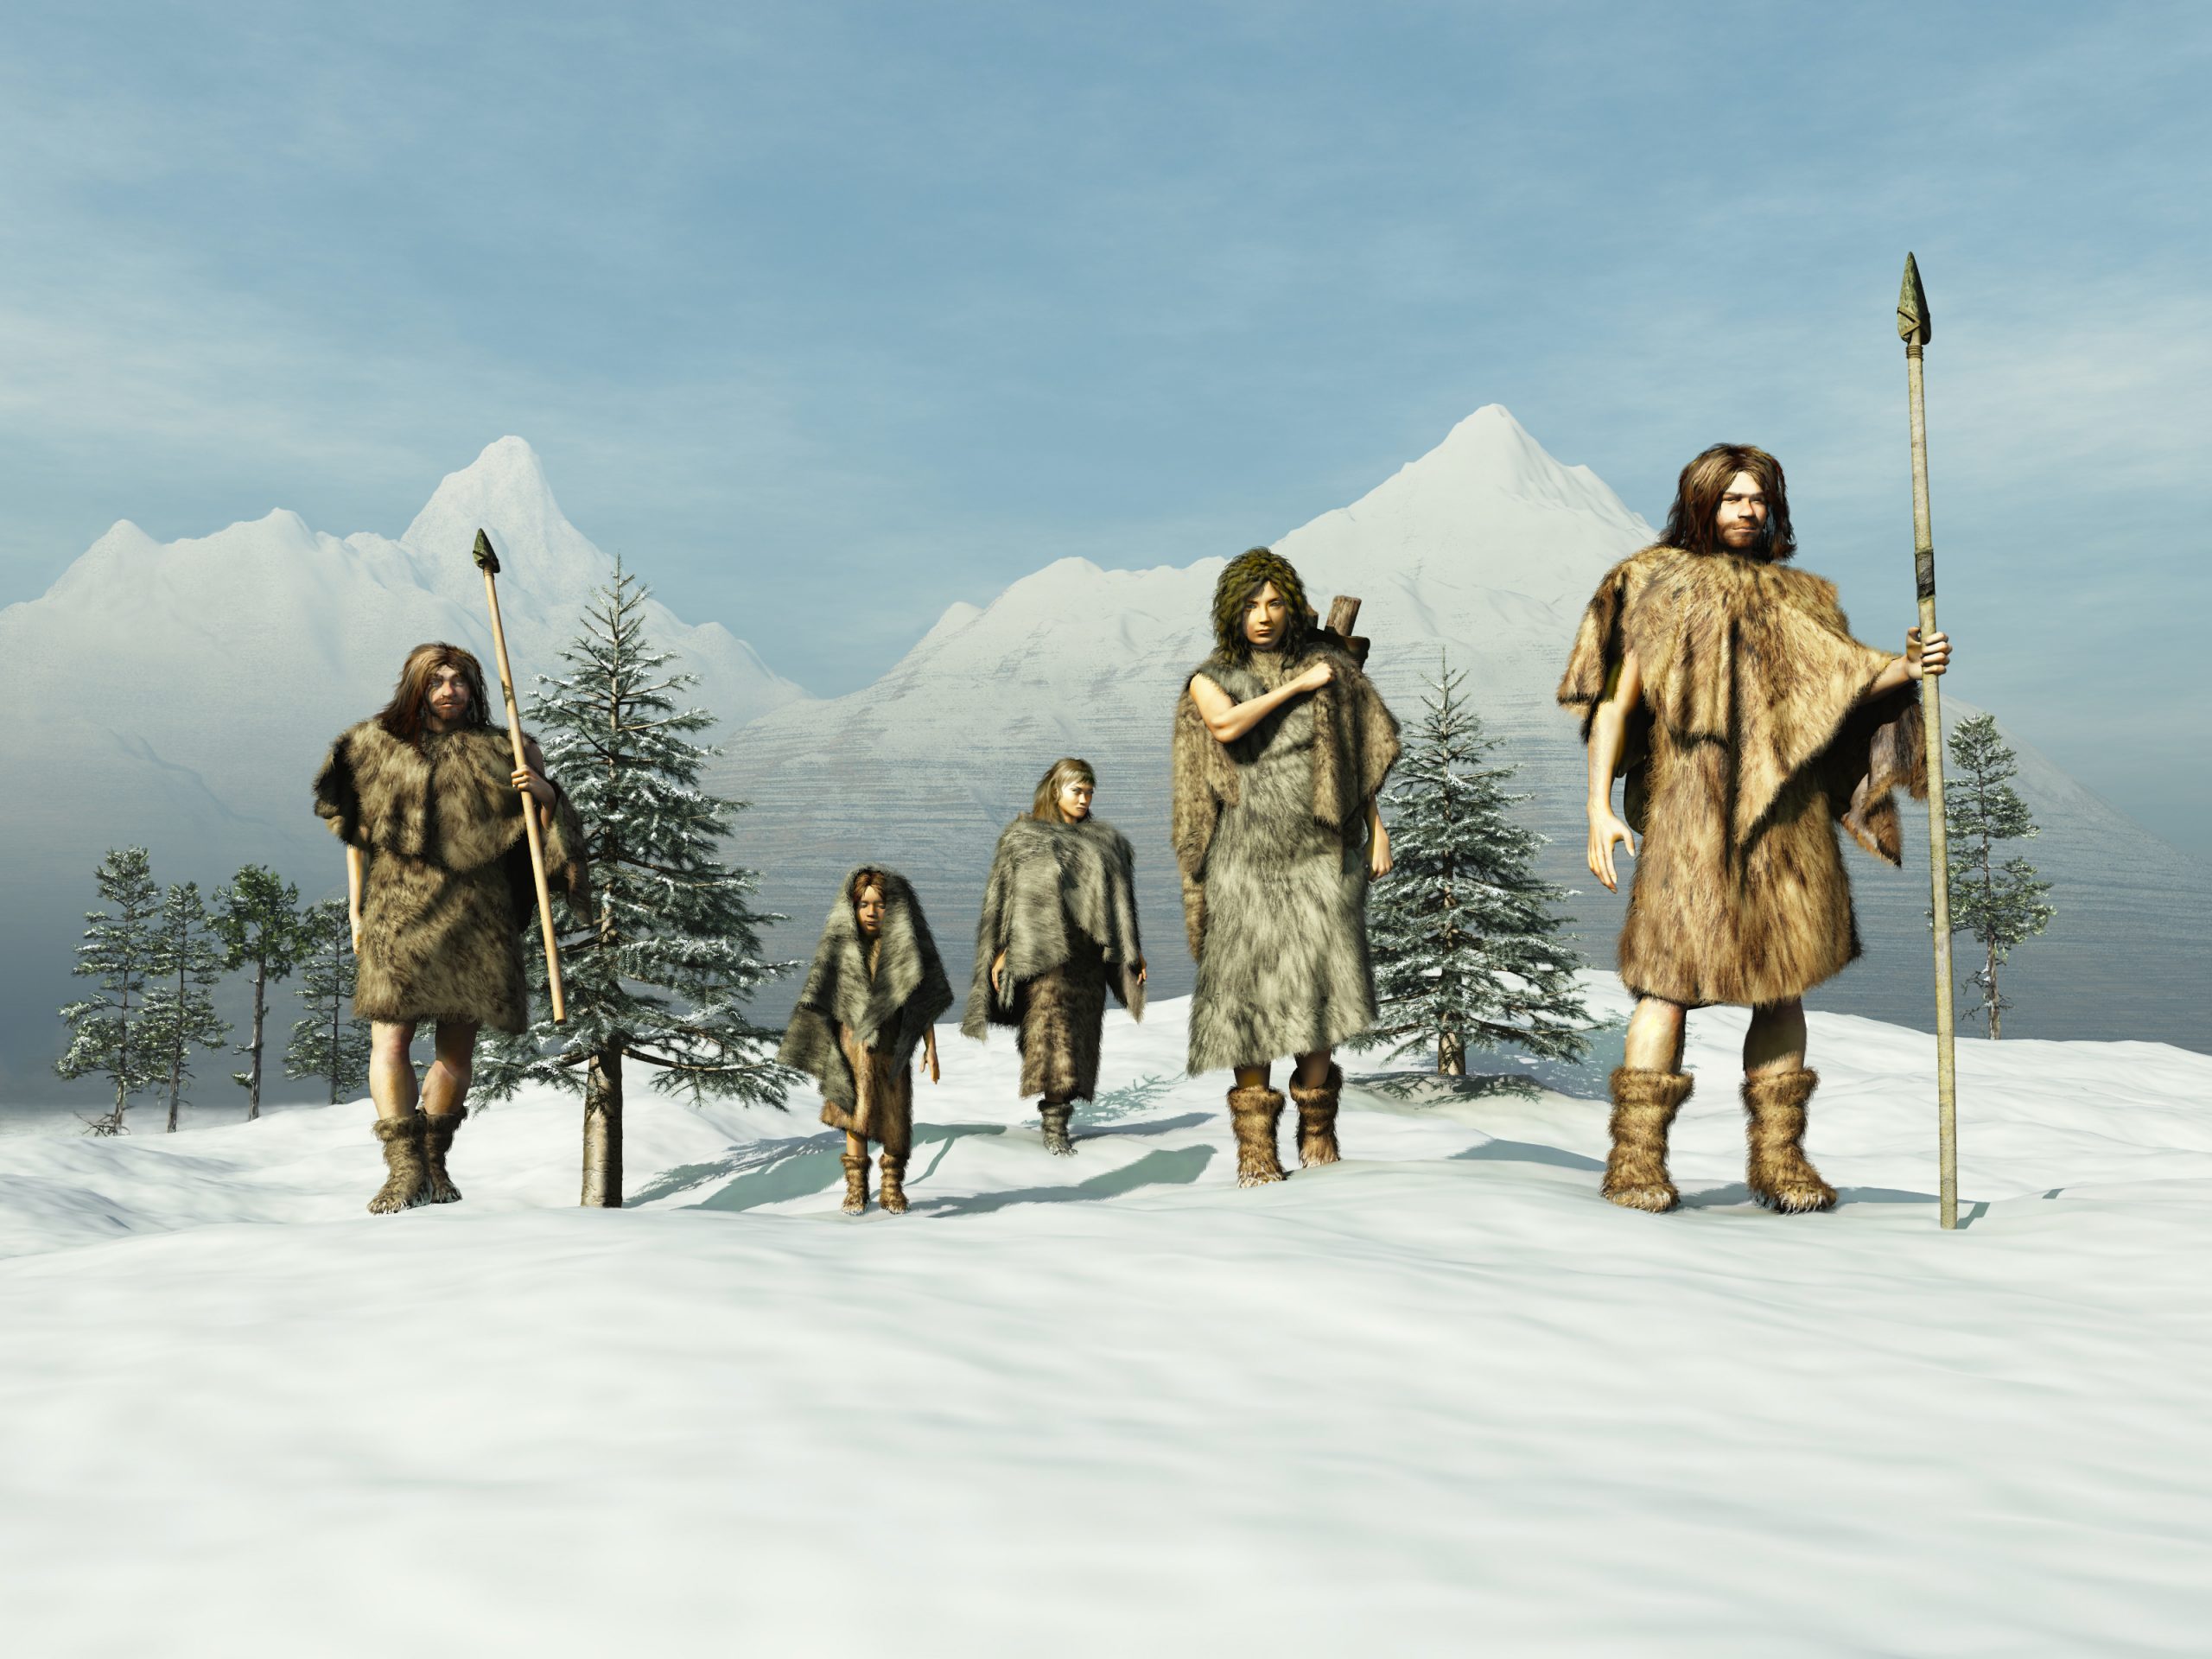 Ice Age Family illustration. Depositphotos.